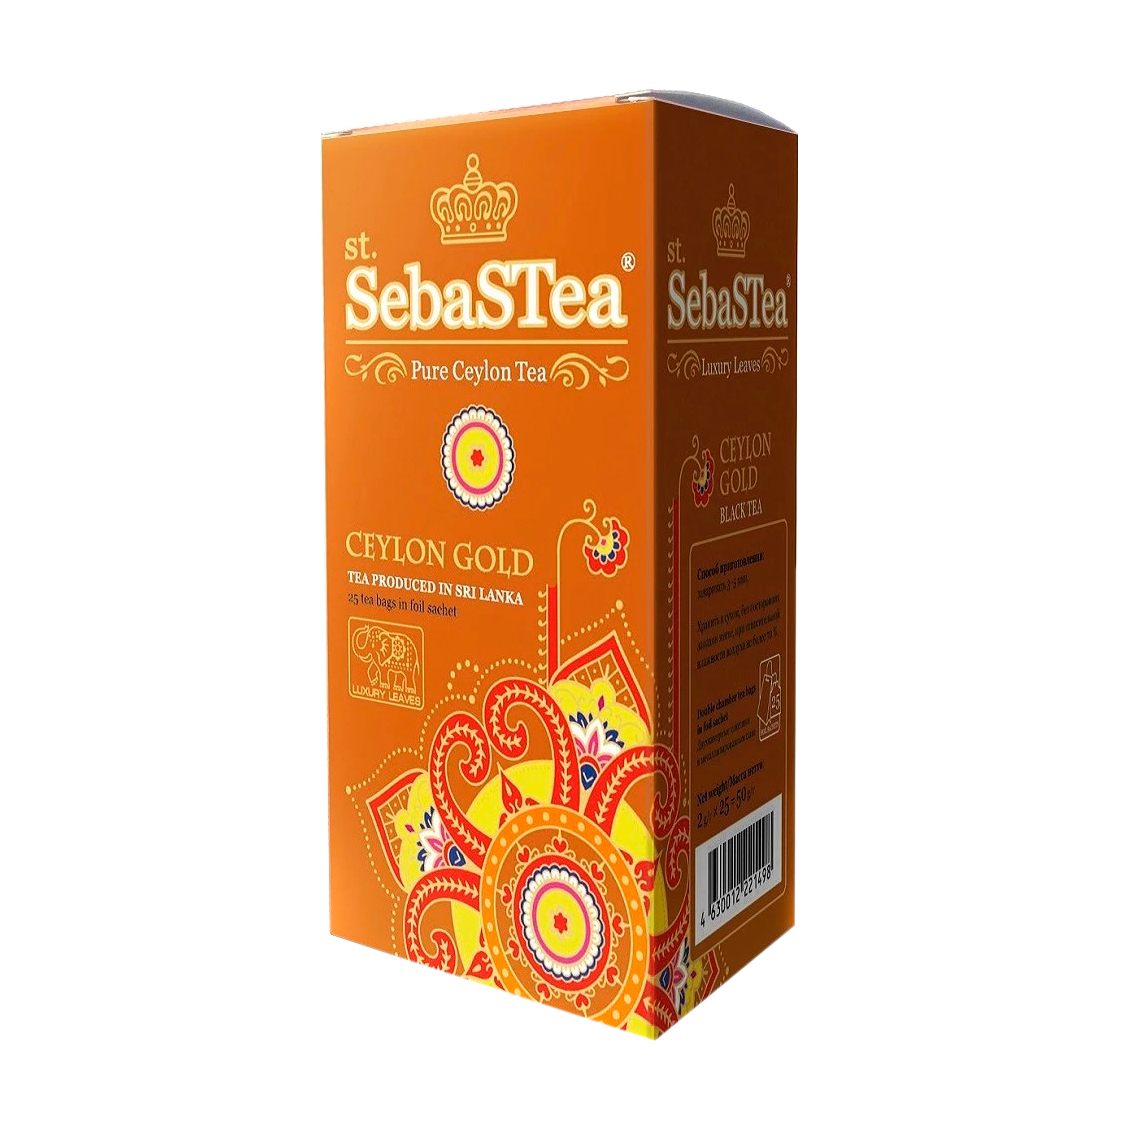 чай sebastea fantasy 5 2 г x 20 шт Чай SebaSTea Ceylon Gold 25х2 г